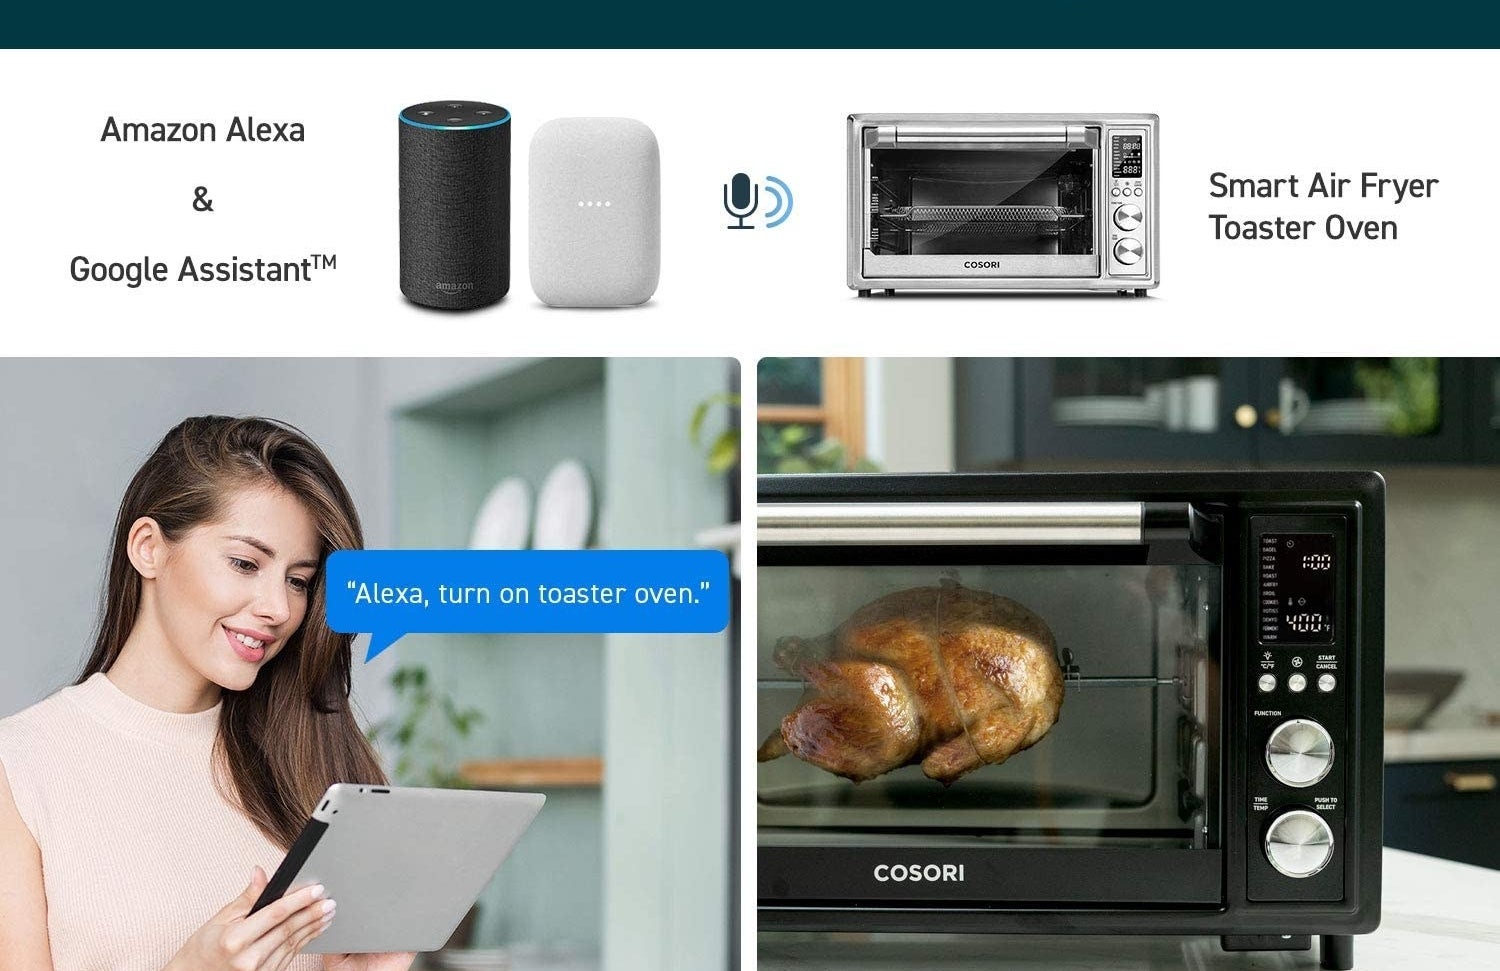 Model using Amazon Alexa to operate the toaster oven